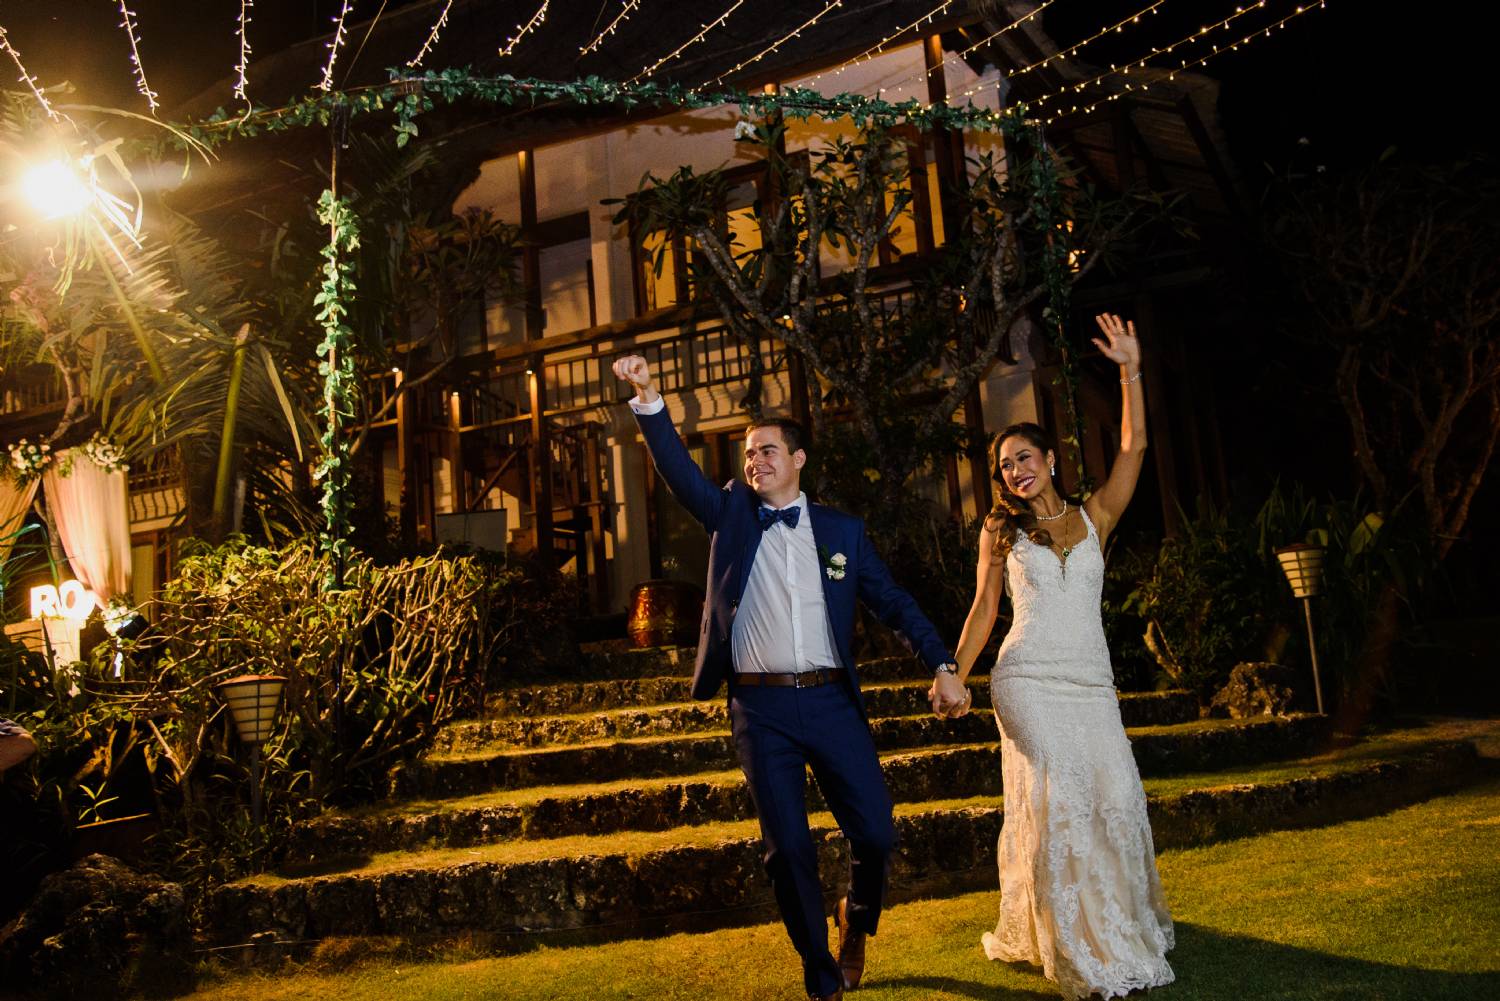 Rachel & Omid gorgeous vintage-rustic wedding at beautiful villa in Bali 5